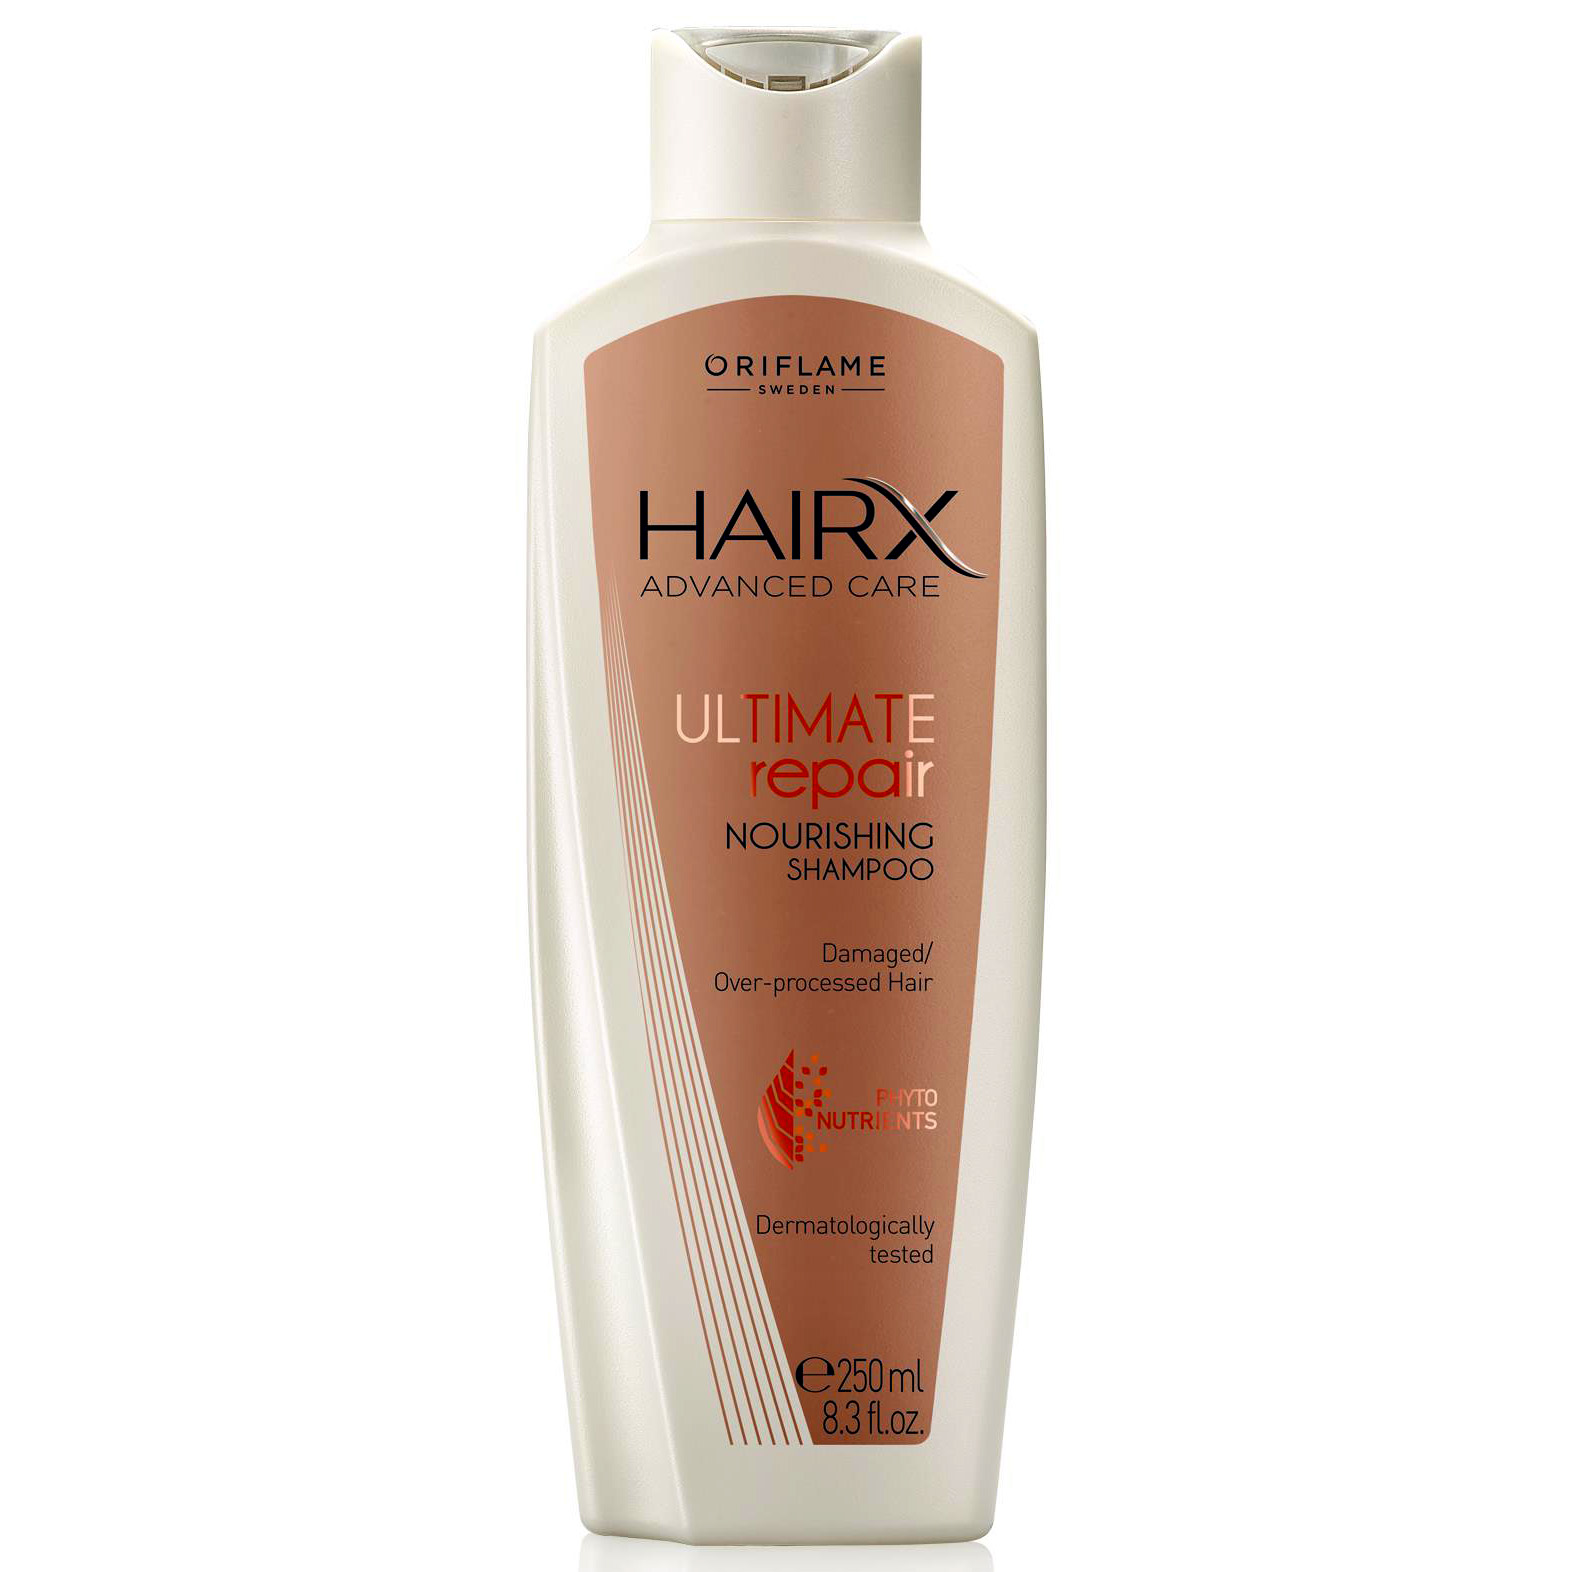 hairx deep cleansing oriflame szampon opinie